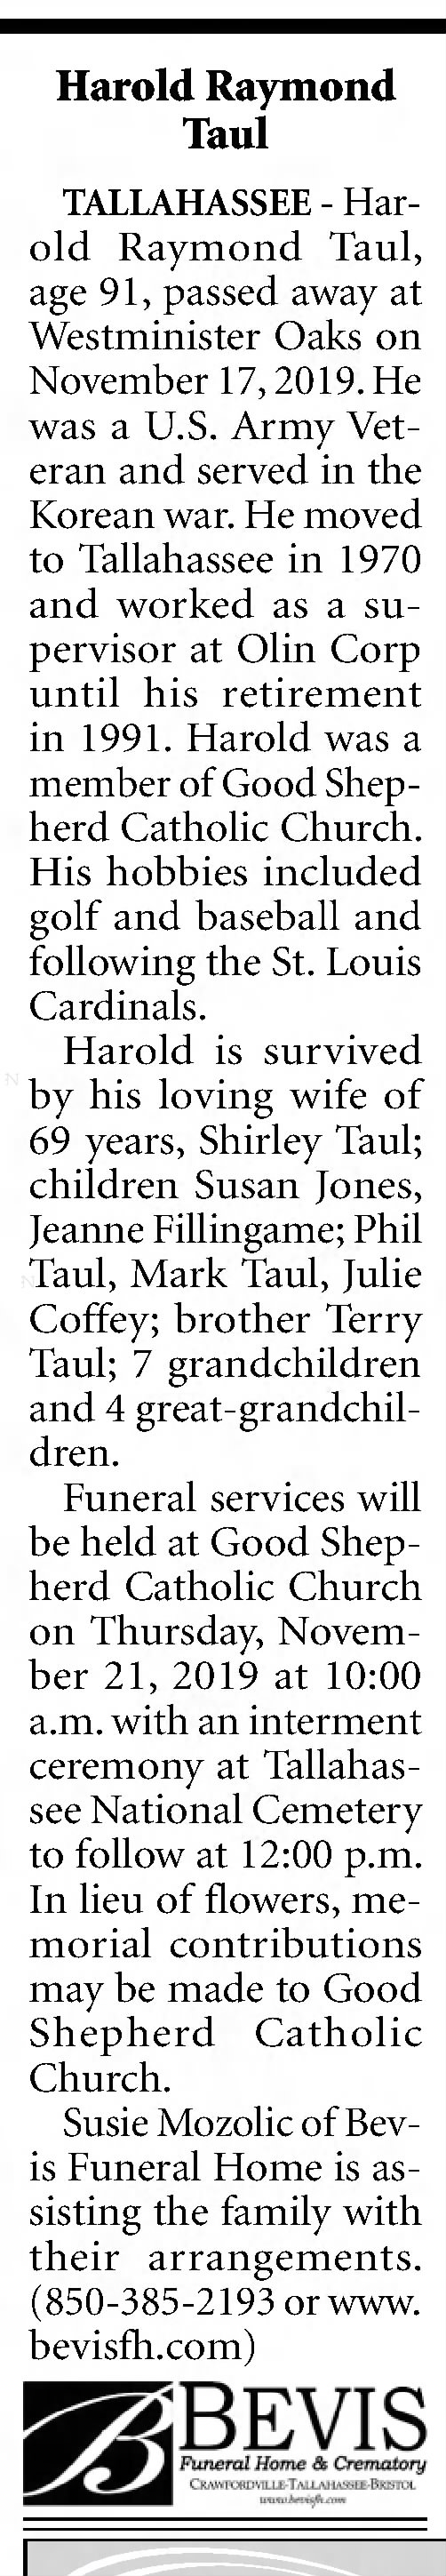 Obituary for Harold Raymond Taul